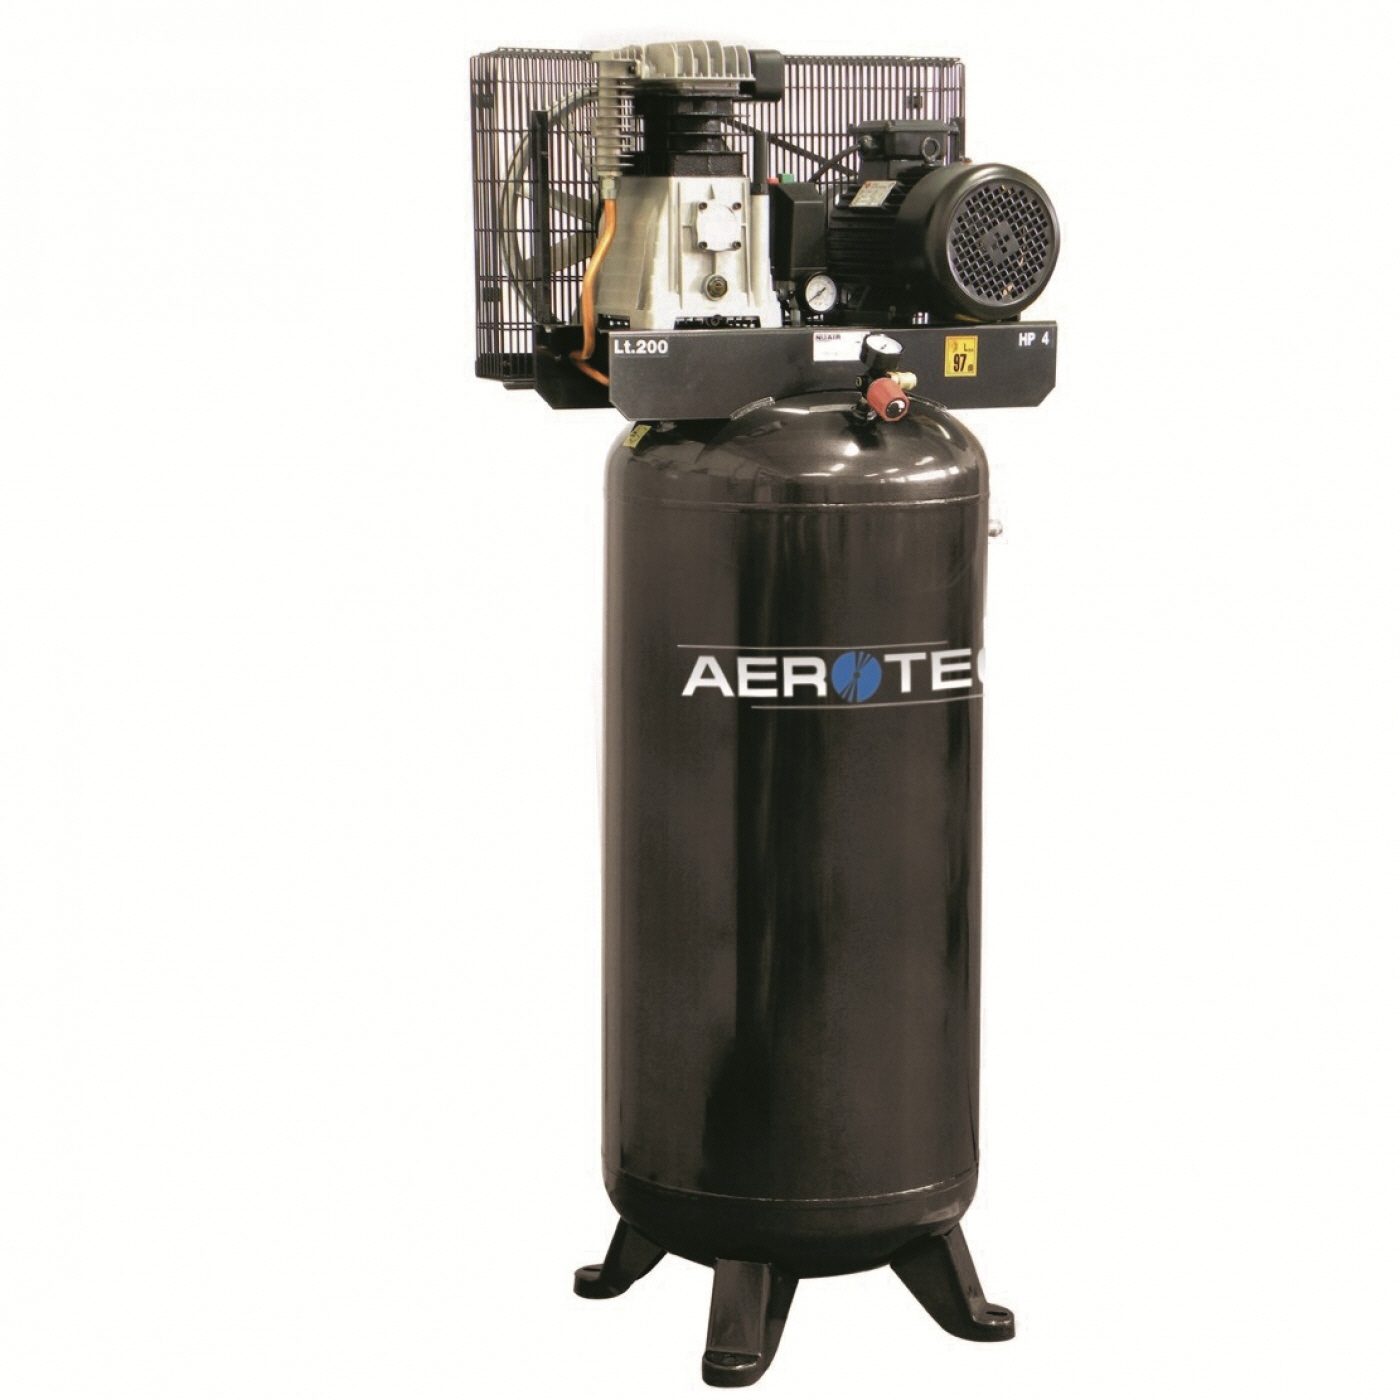 AEROTEC Kolbenkompressor 600-200 stehend -10 bar Stationär